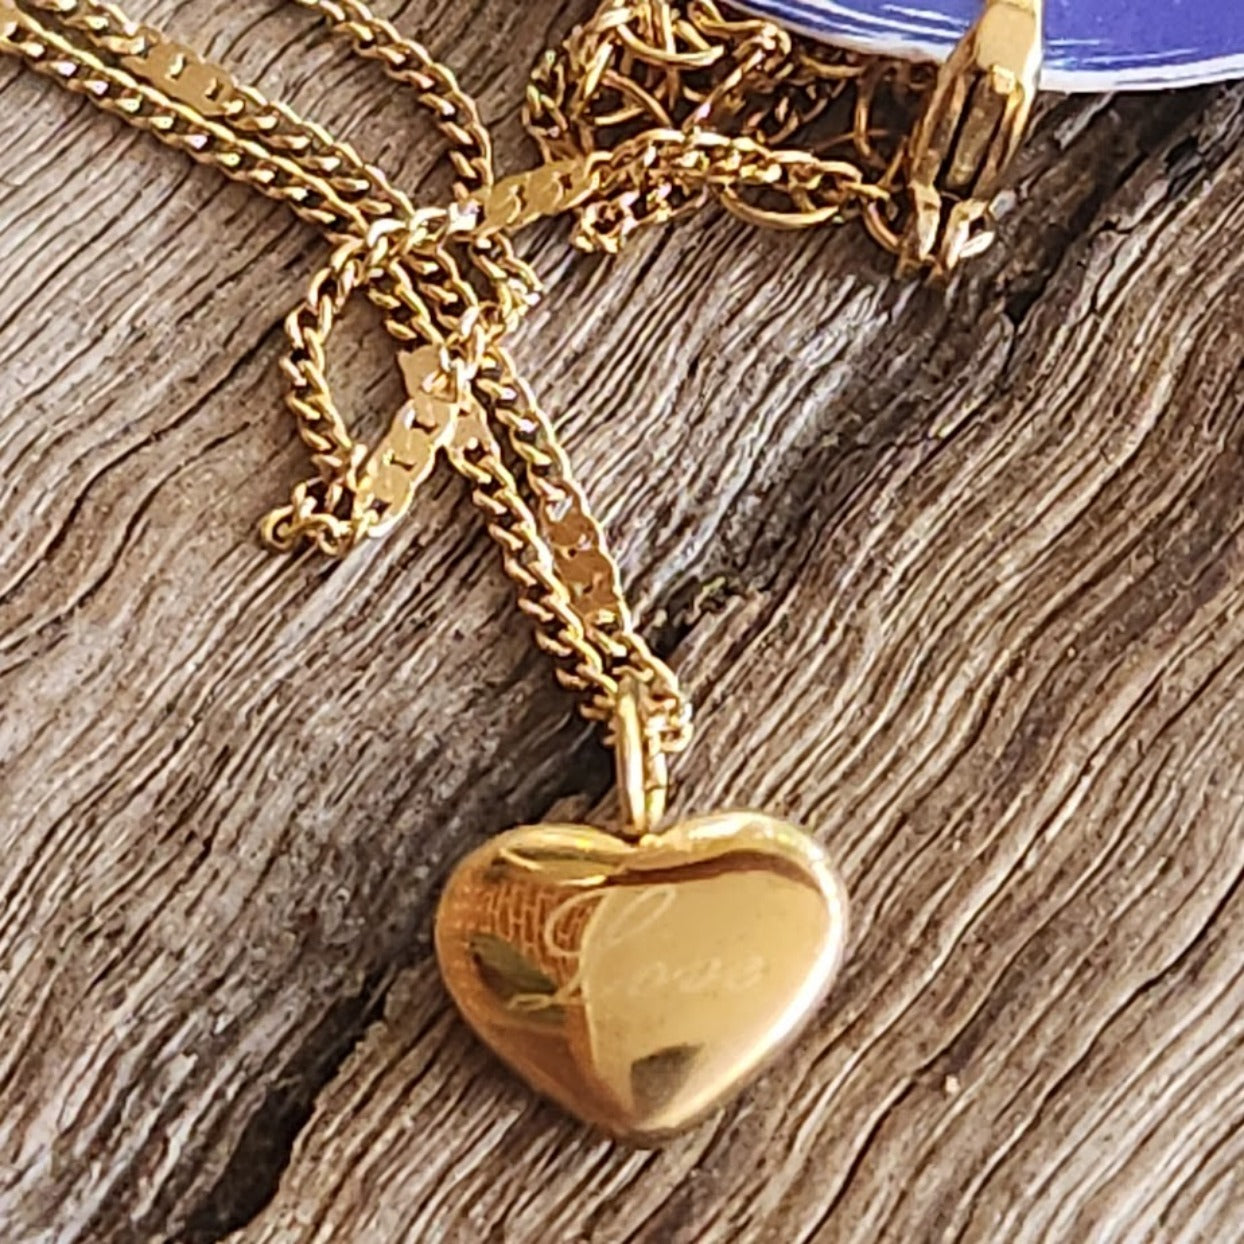 GOLD HEART 'LOVE' WATERPROOF NECKLACE - Premium Necklace from www.beachboho.com.au - Just $75! Shop now at www.beachboho.com.au